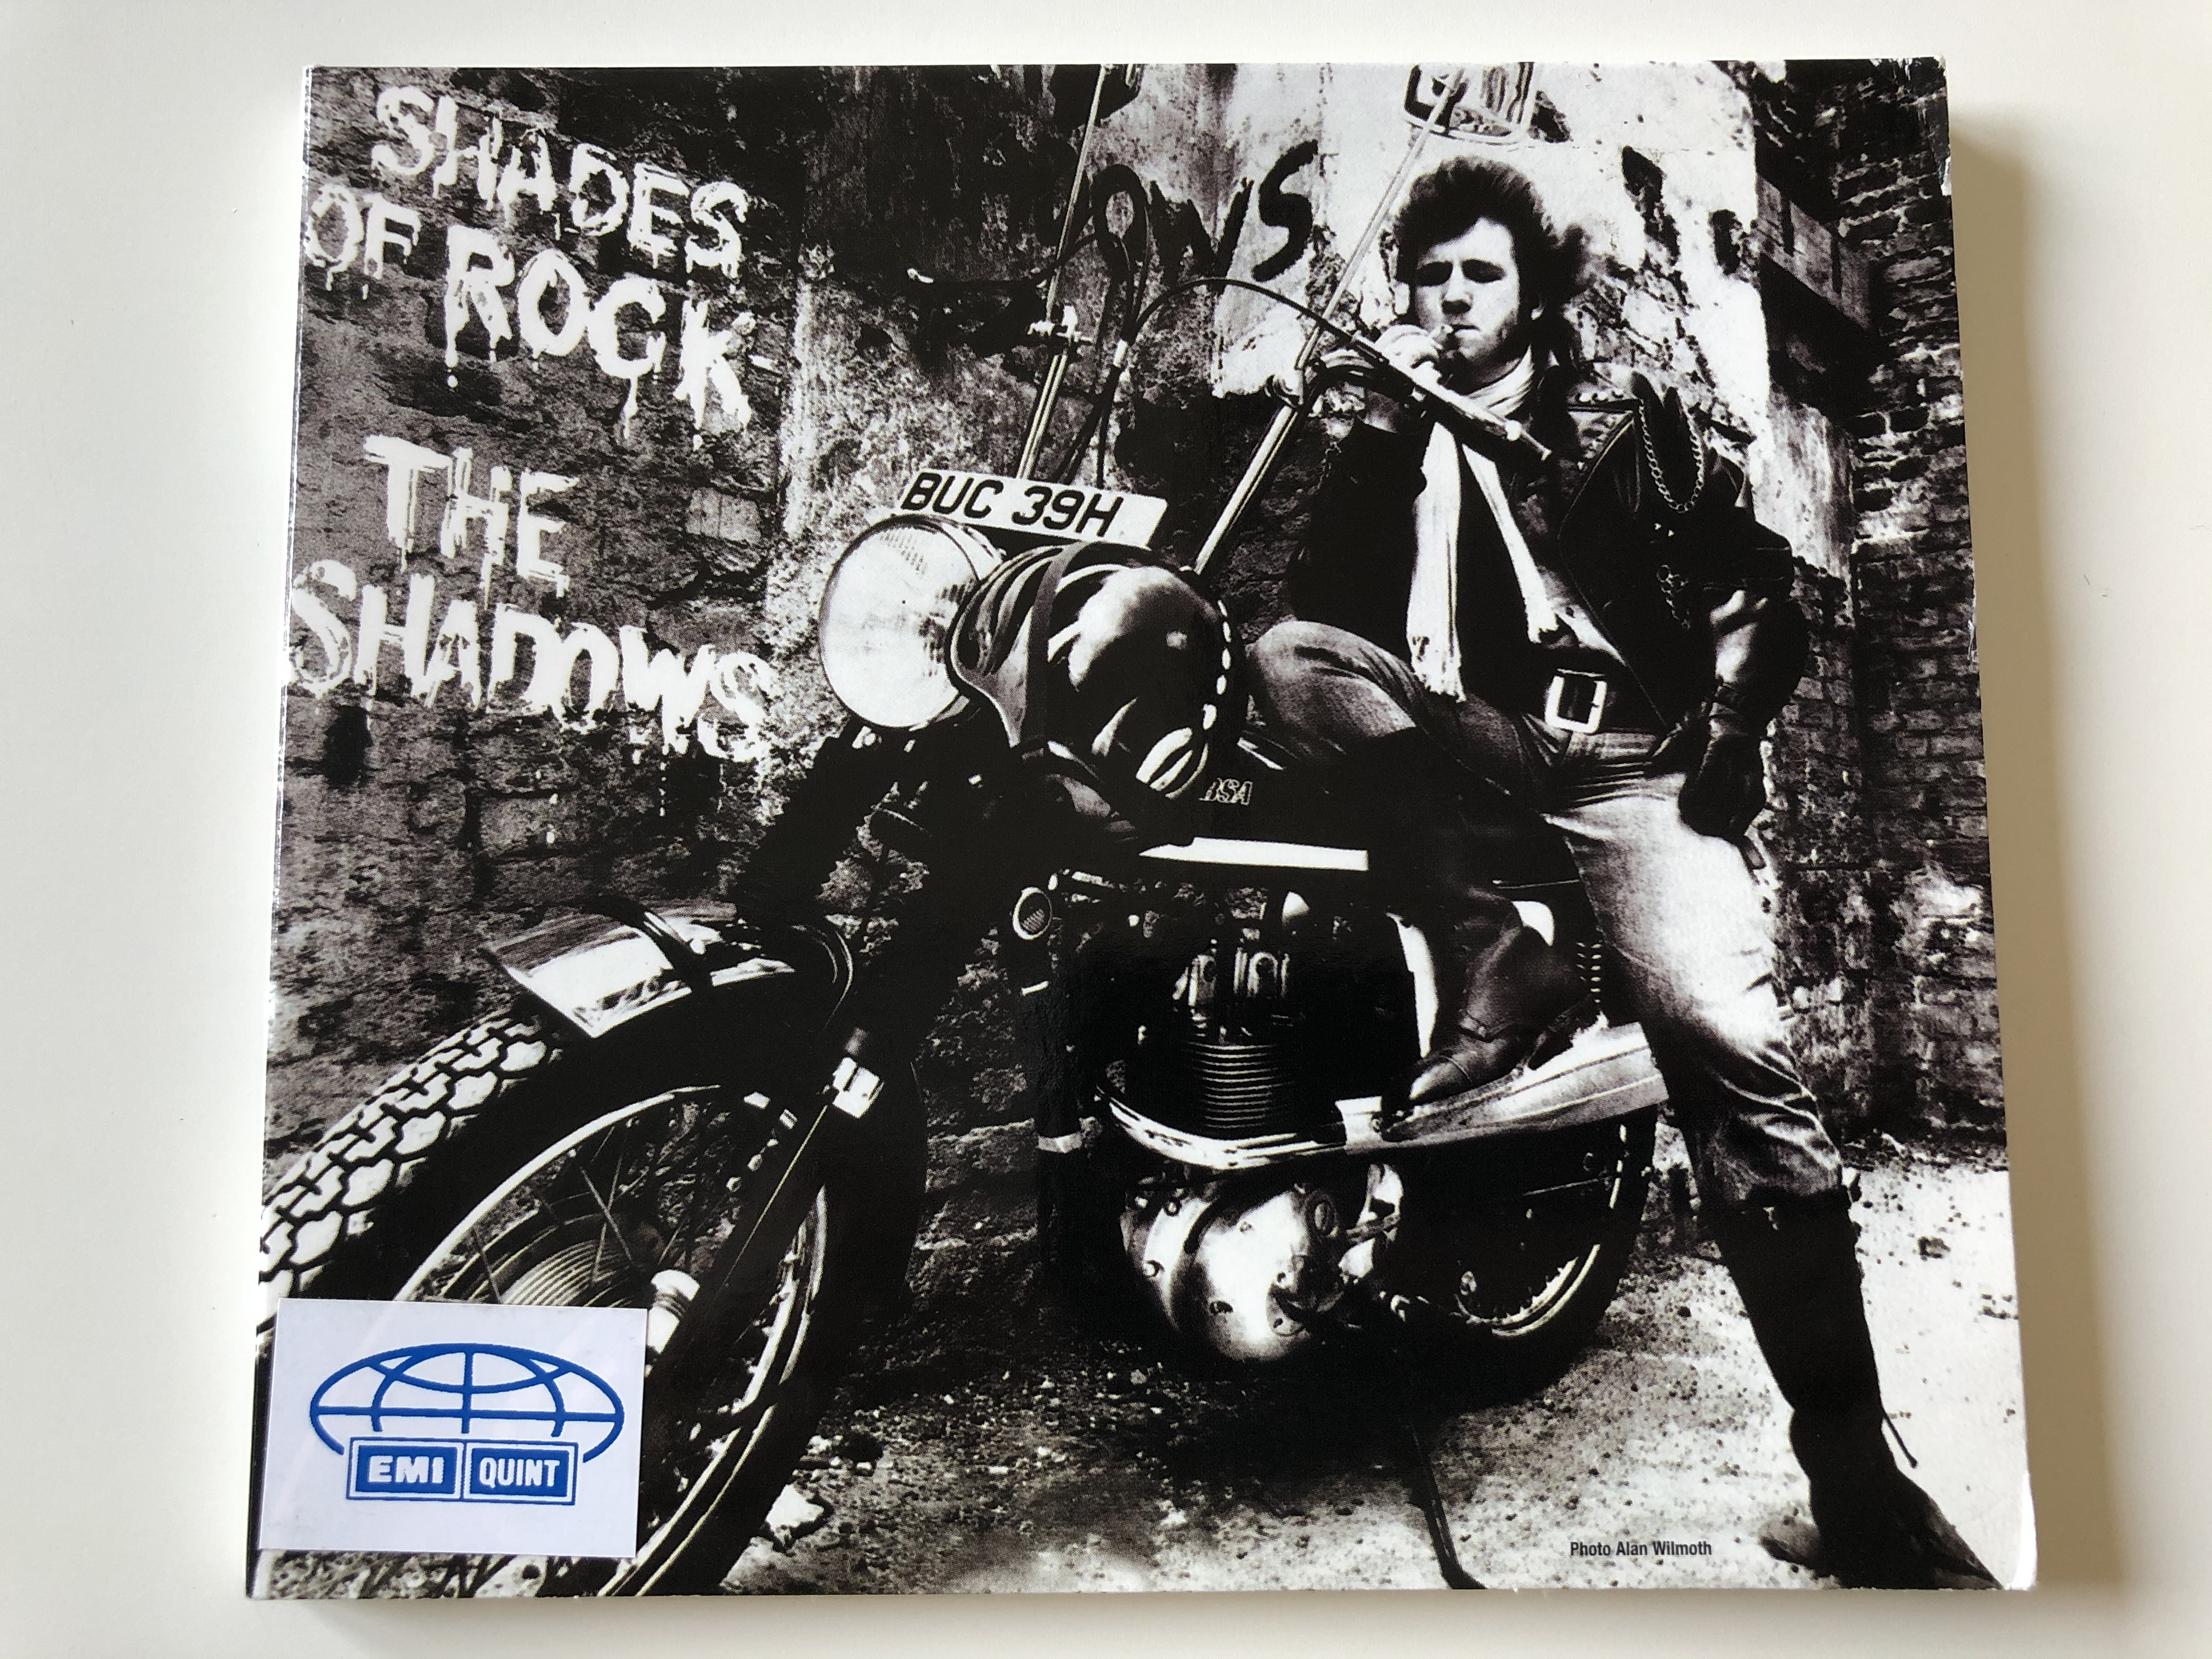 shades-of-rock-the-shadows-emi-audio-cd-1999-stereo-724352013326-1-.jpg